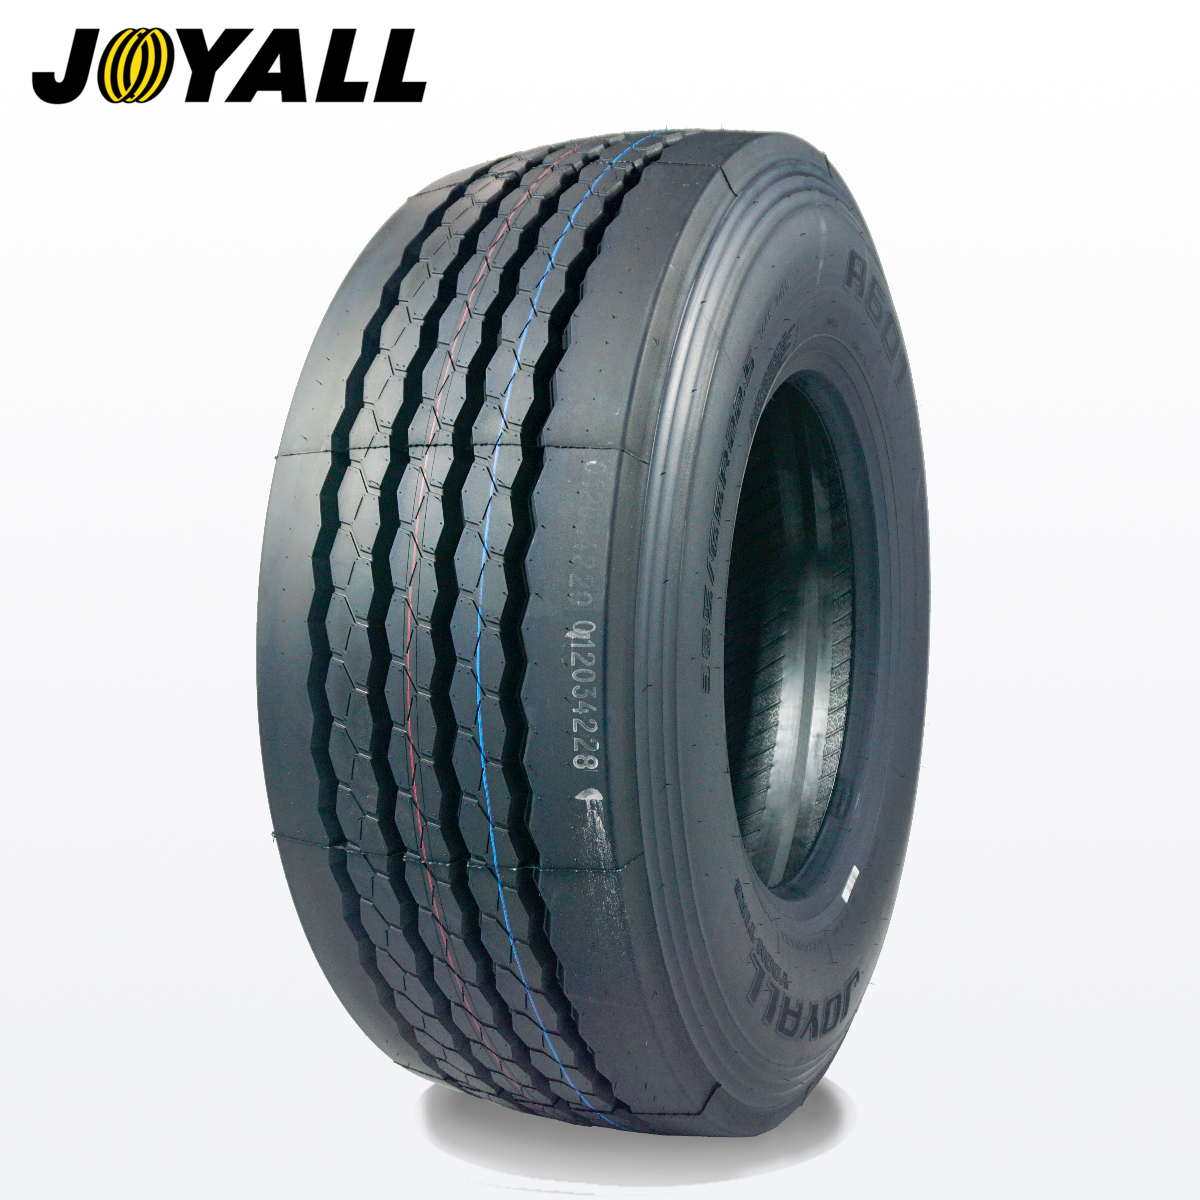 JOYALL brand truck tyre